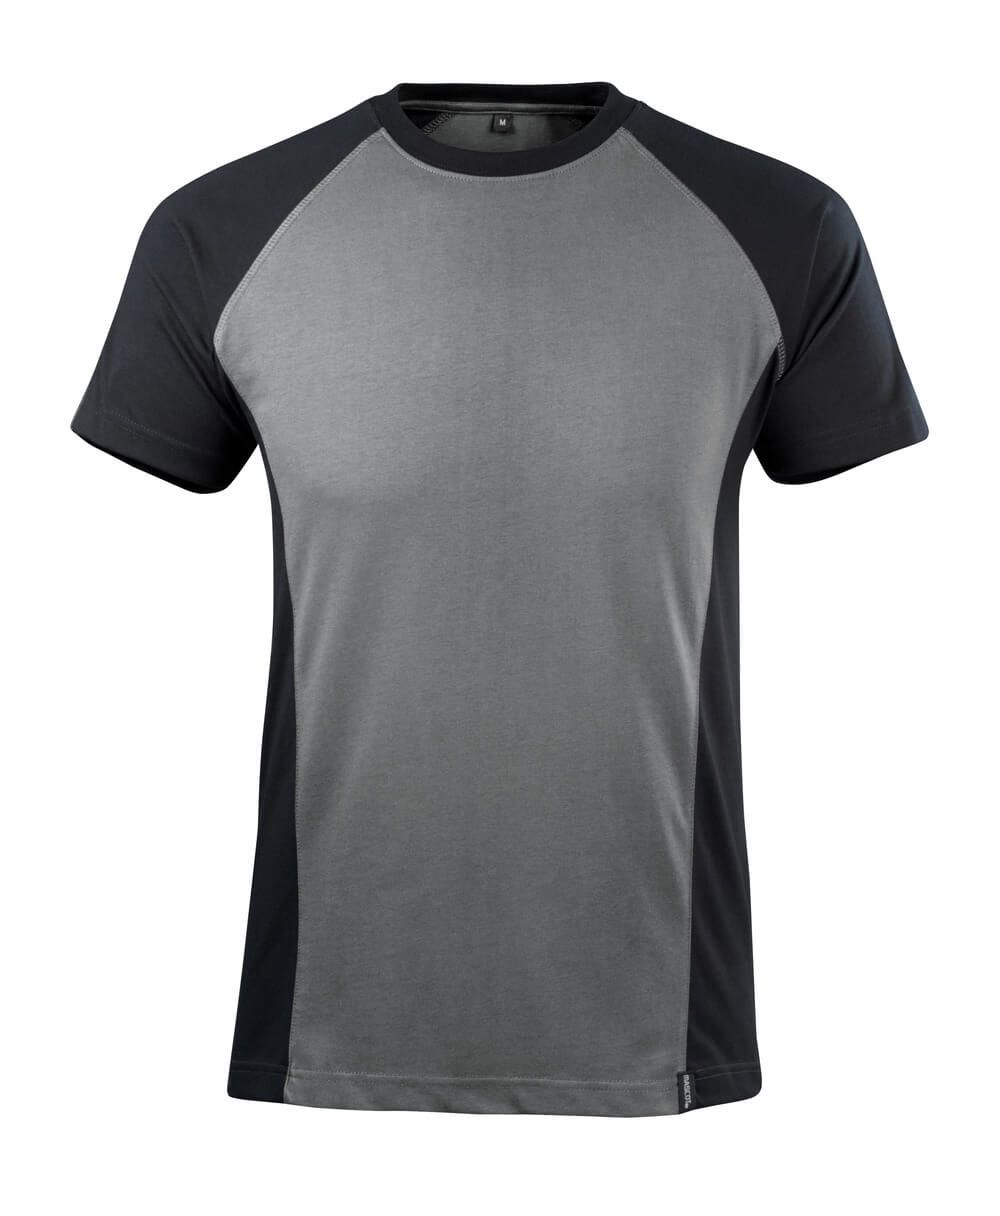 Mascot Workwear Black, Grey Cotton, Polyester Short Sleeve T-Shirt, UK- 2XL, EUR- 2XL